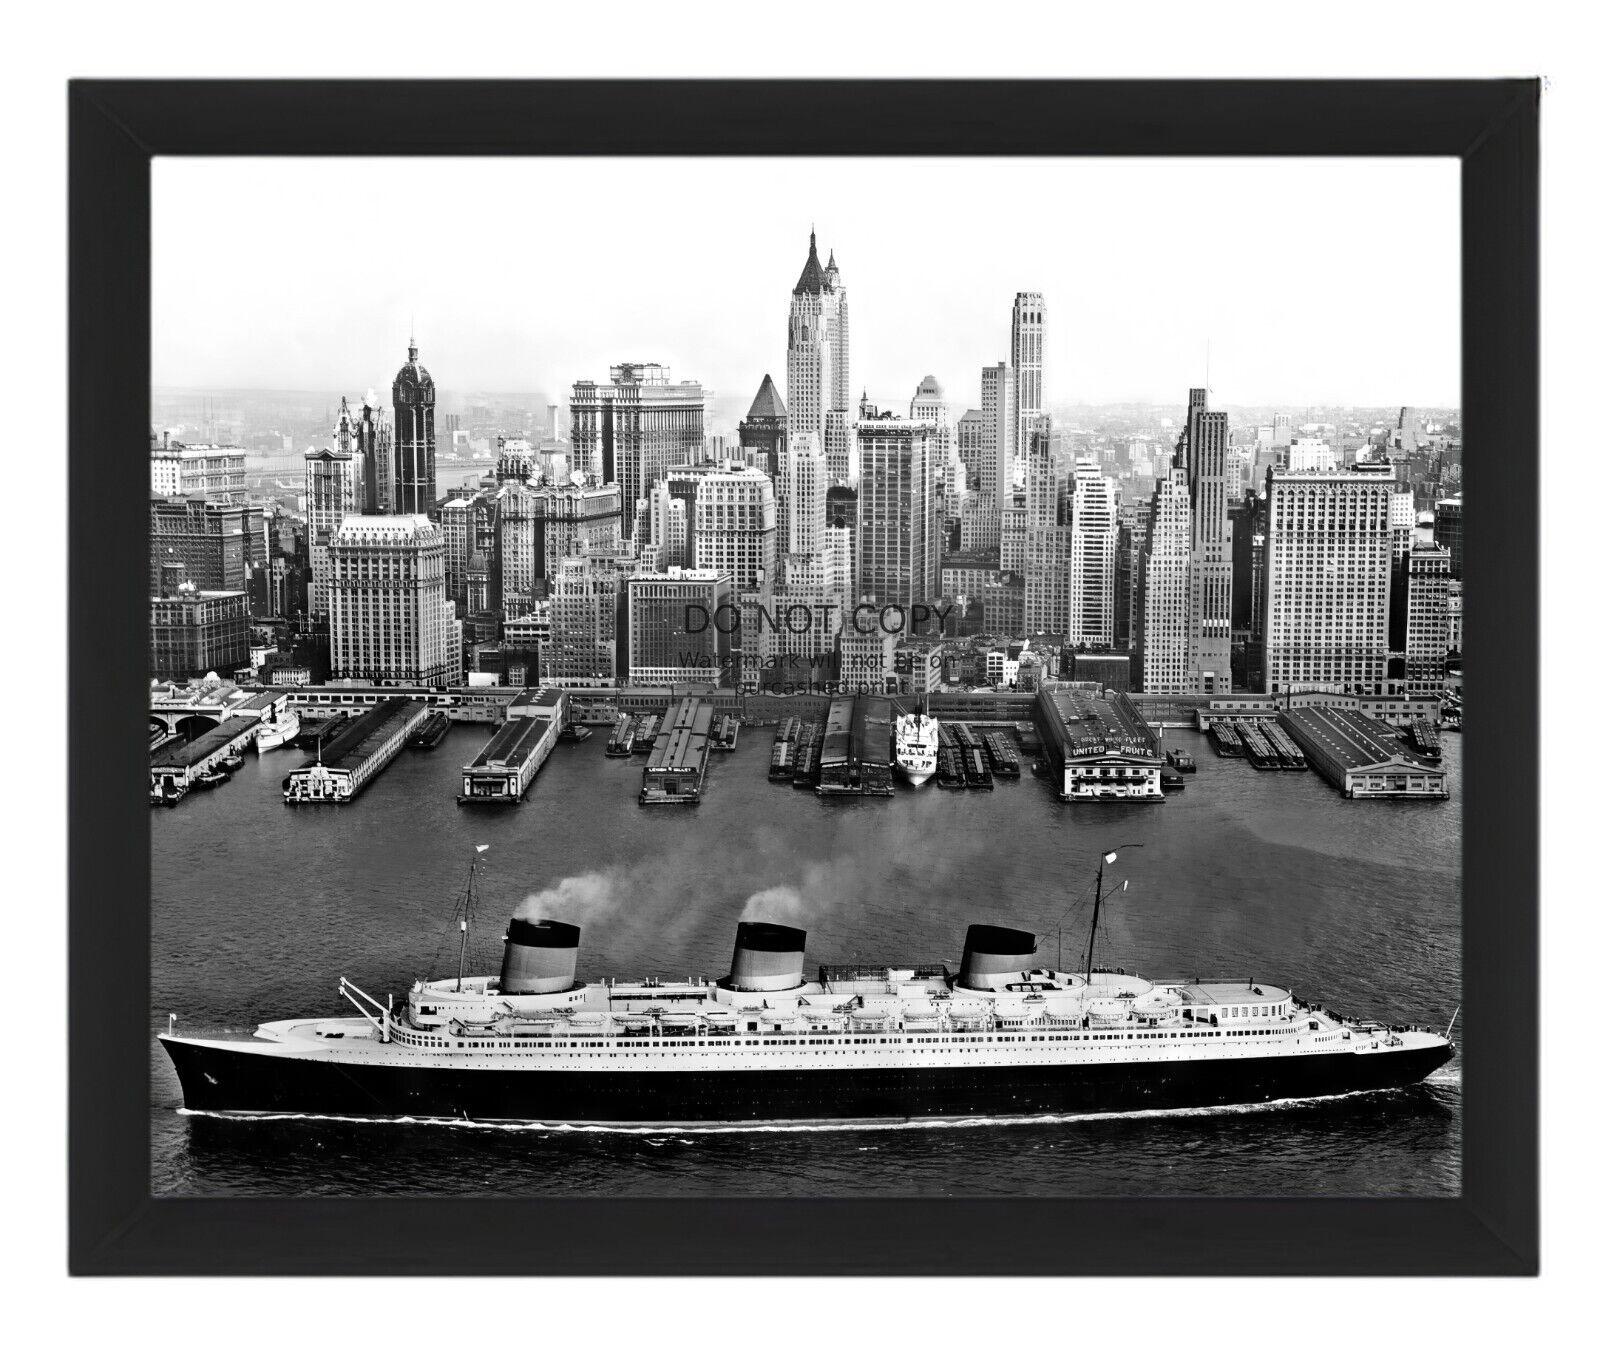 SS NORMANDIE FRENCH OCEAN LINER IN NEW YORK PASSENGER SHIP 8X10 FRAMED PHOTO